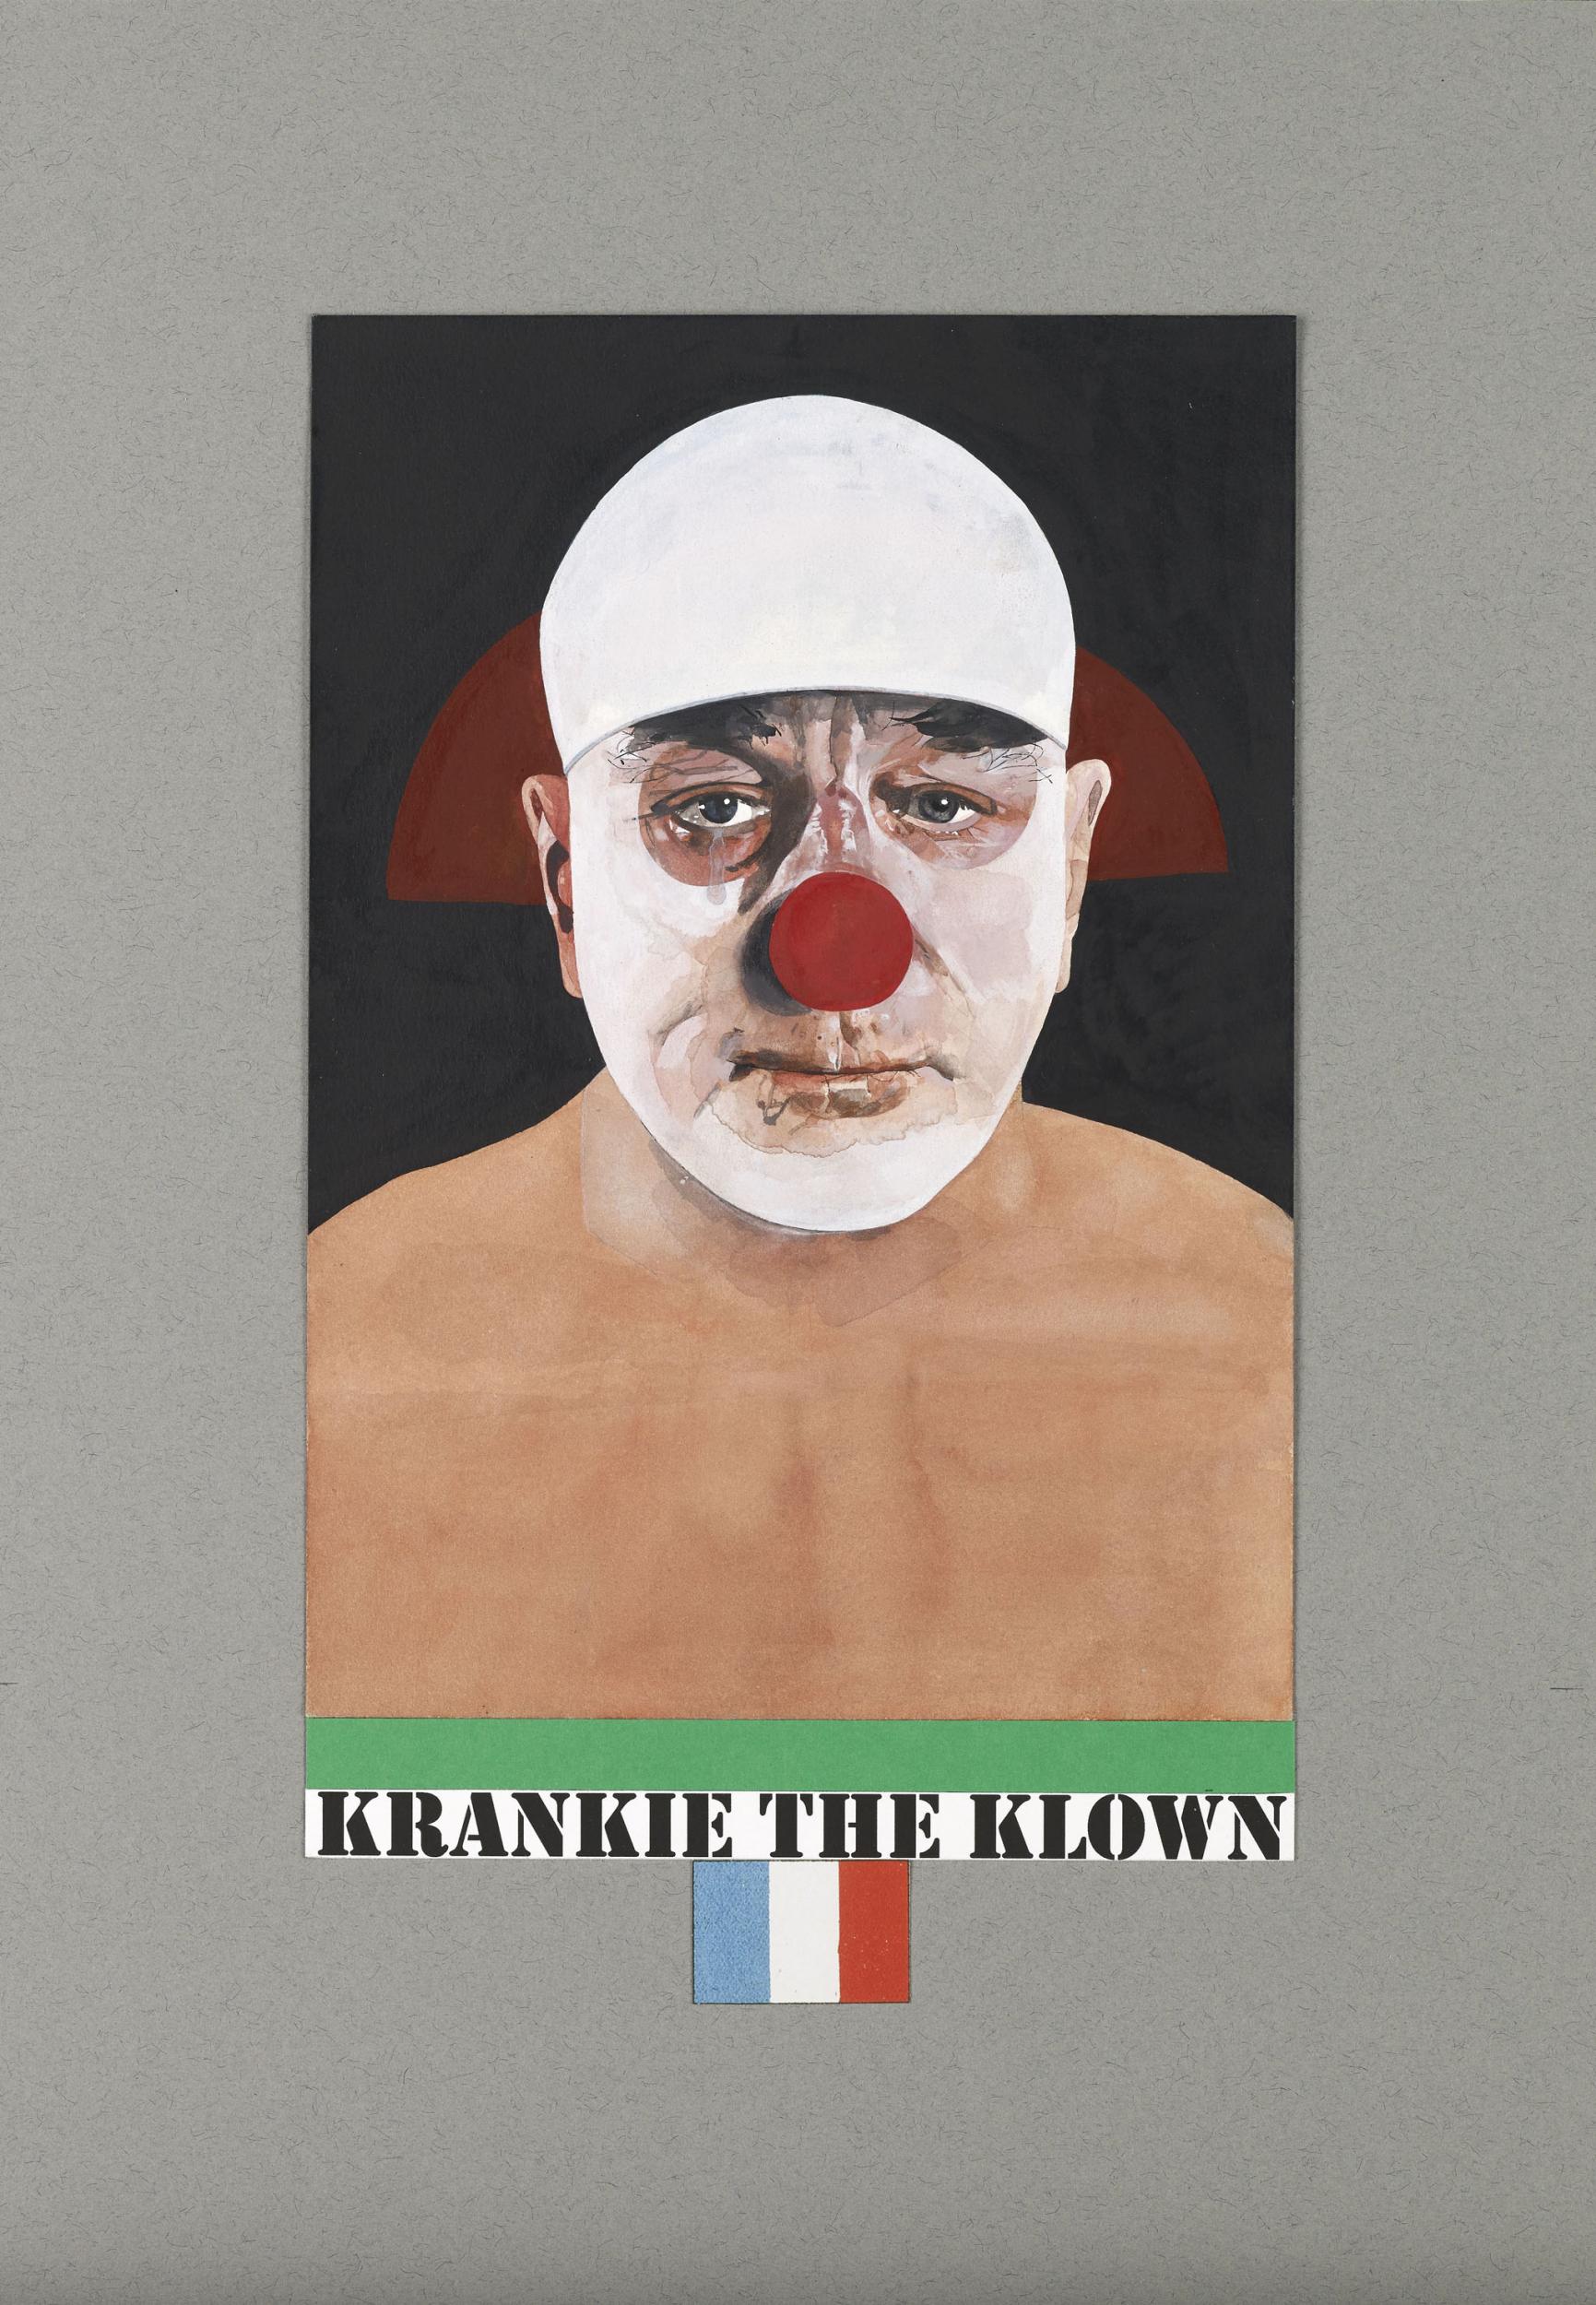 Peter Blake, Krankie the Klown, 2015, watercolour on paper